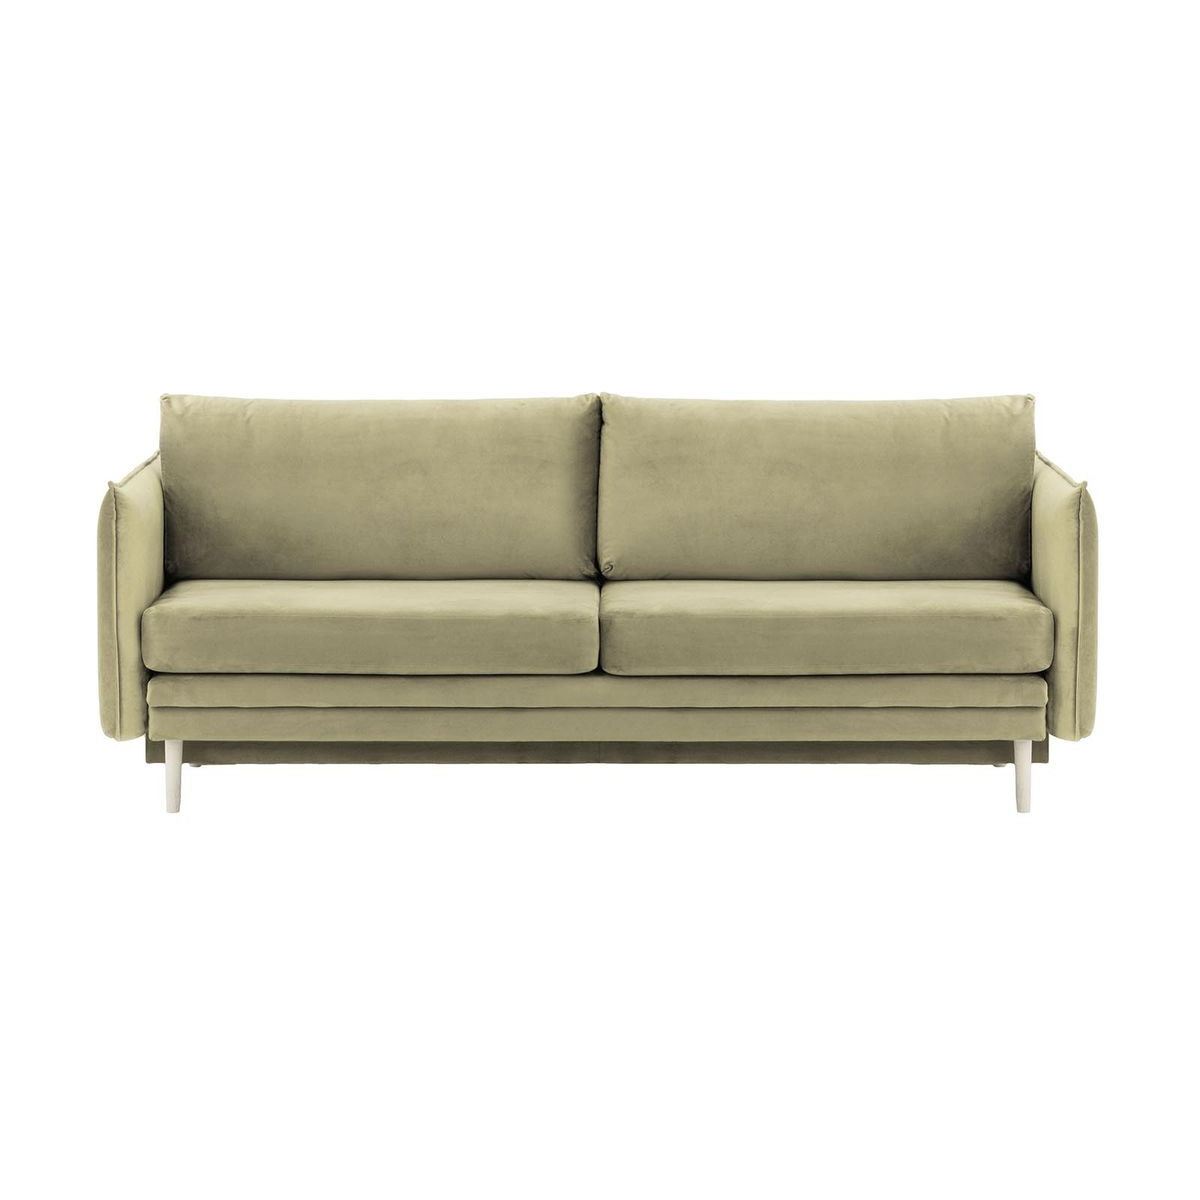 Nimbus Sofa Bed with Storage, mink, Leg colour: white - image 1